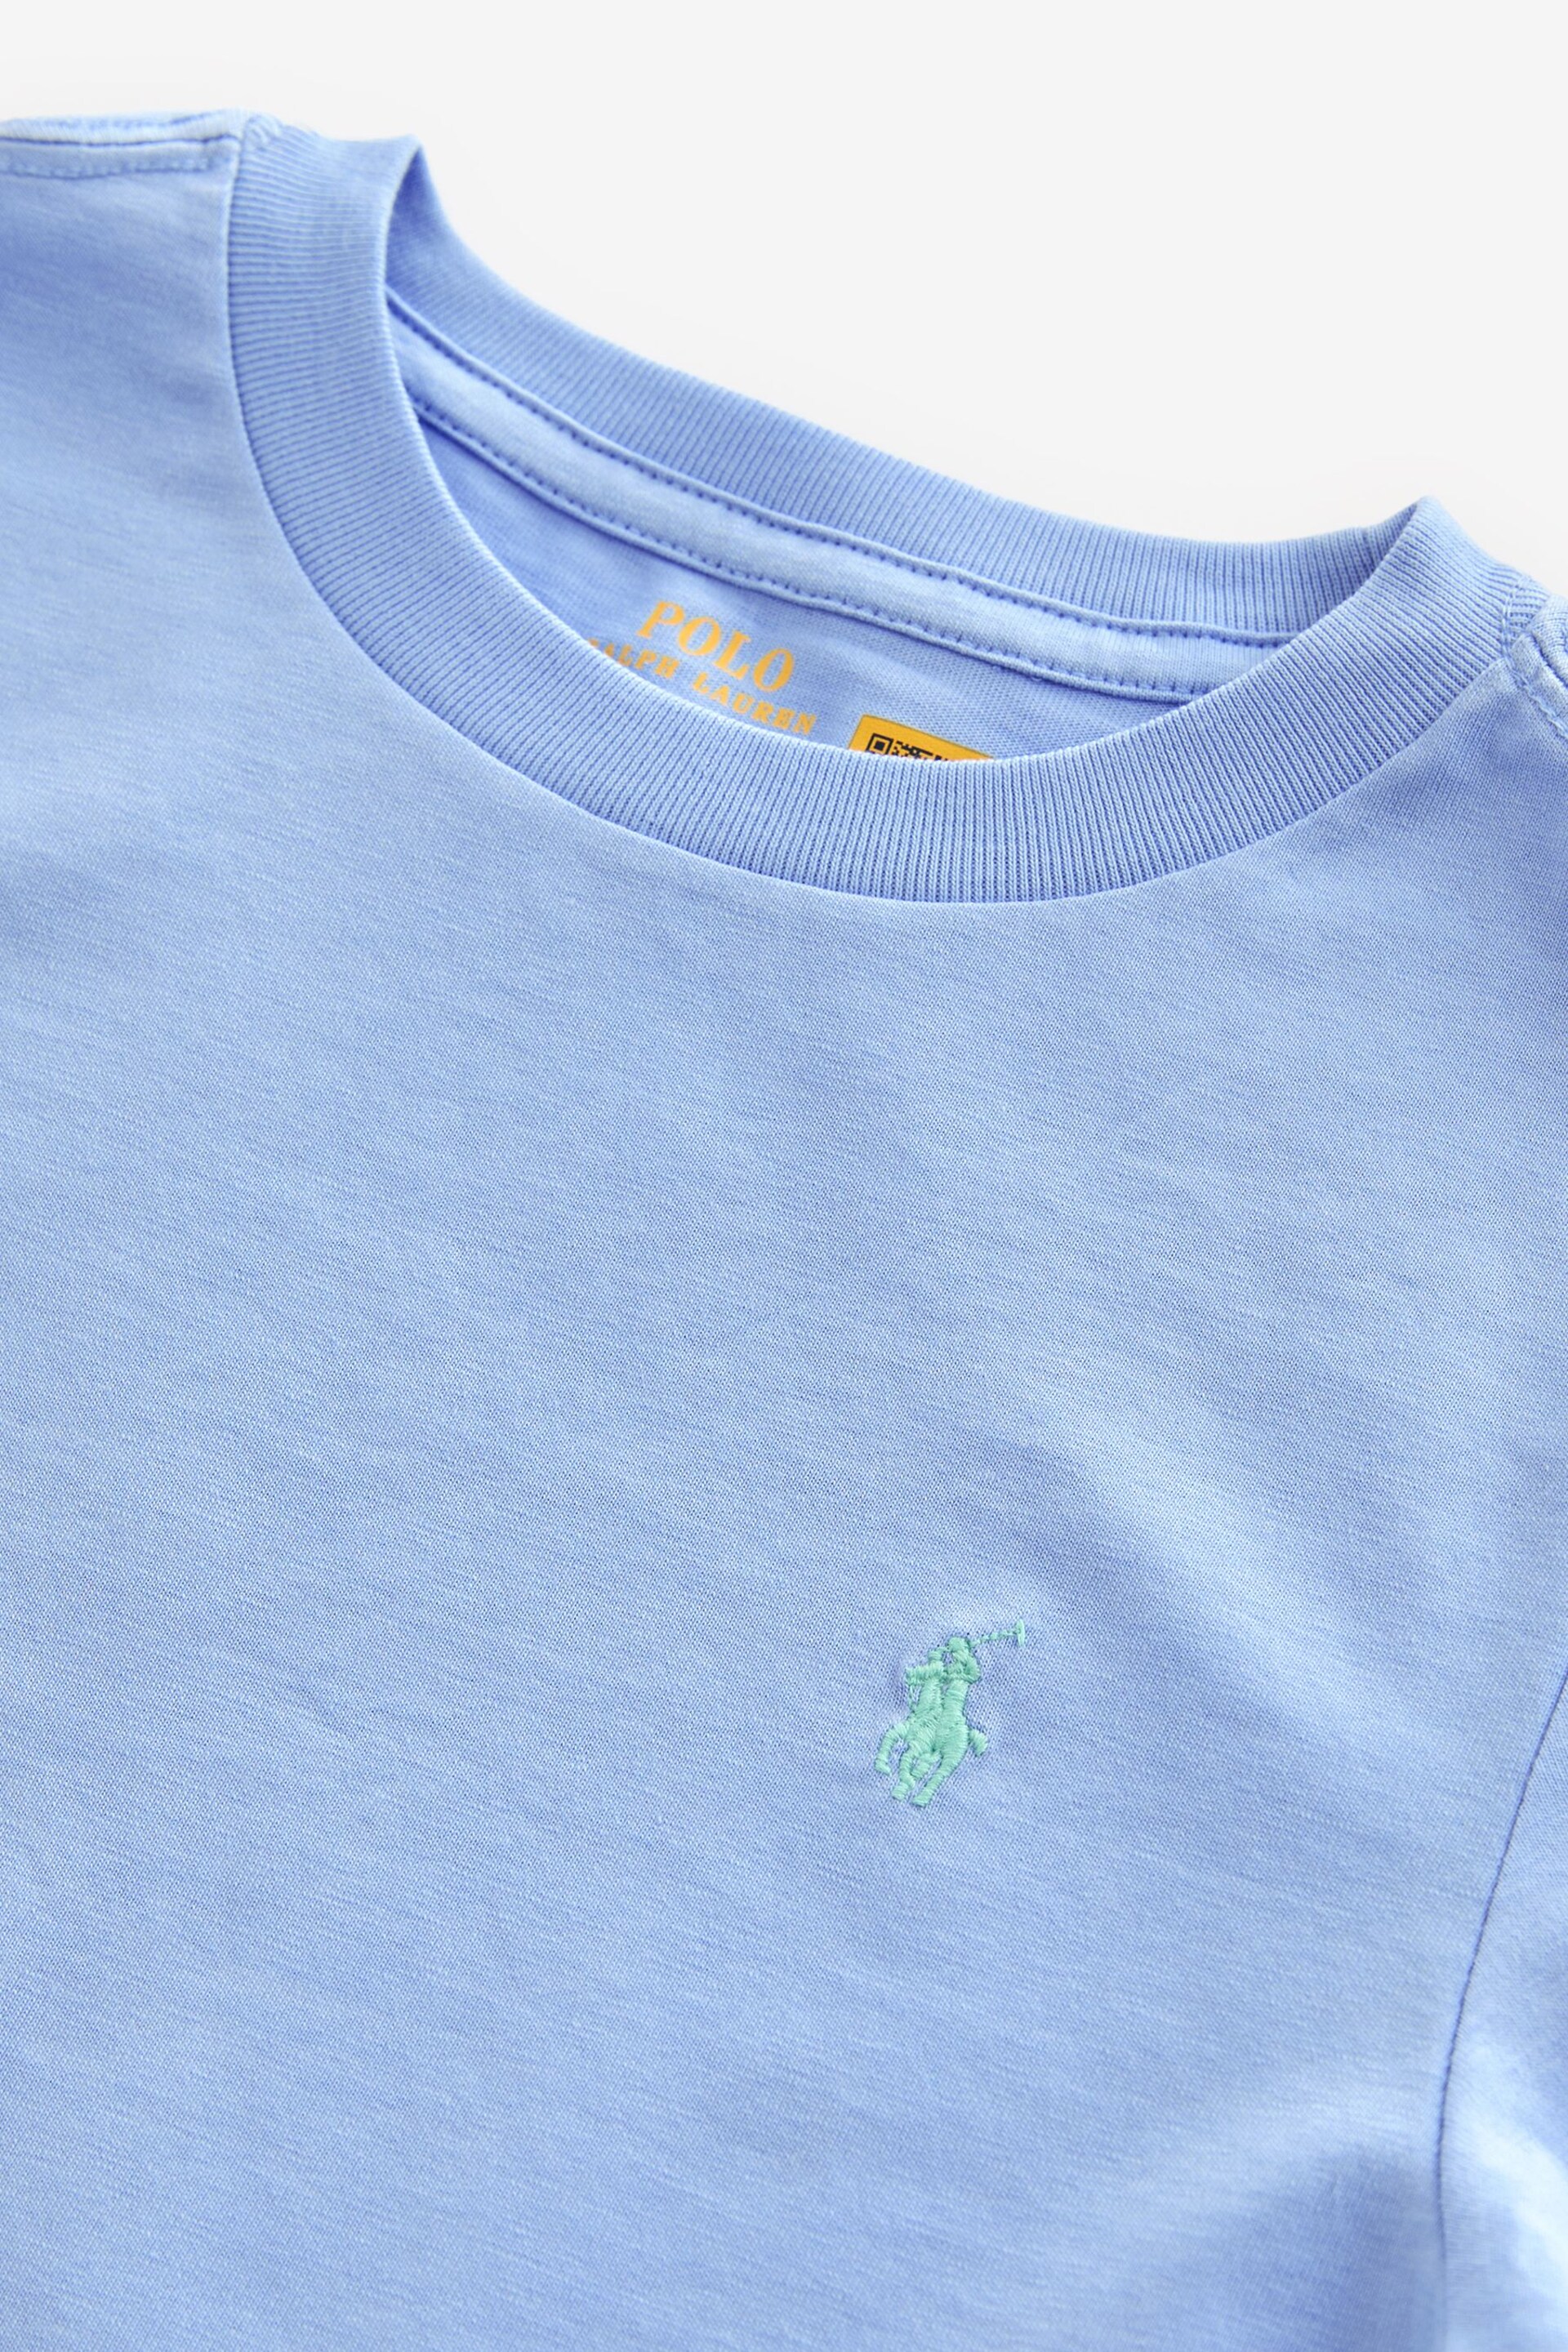 Polo Ralph Lauren Boys Cotton Jersey Crew Neck T-Shirt - Image 4 of 4